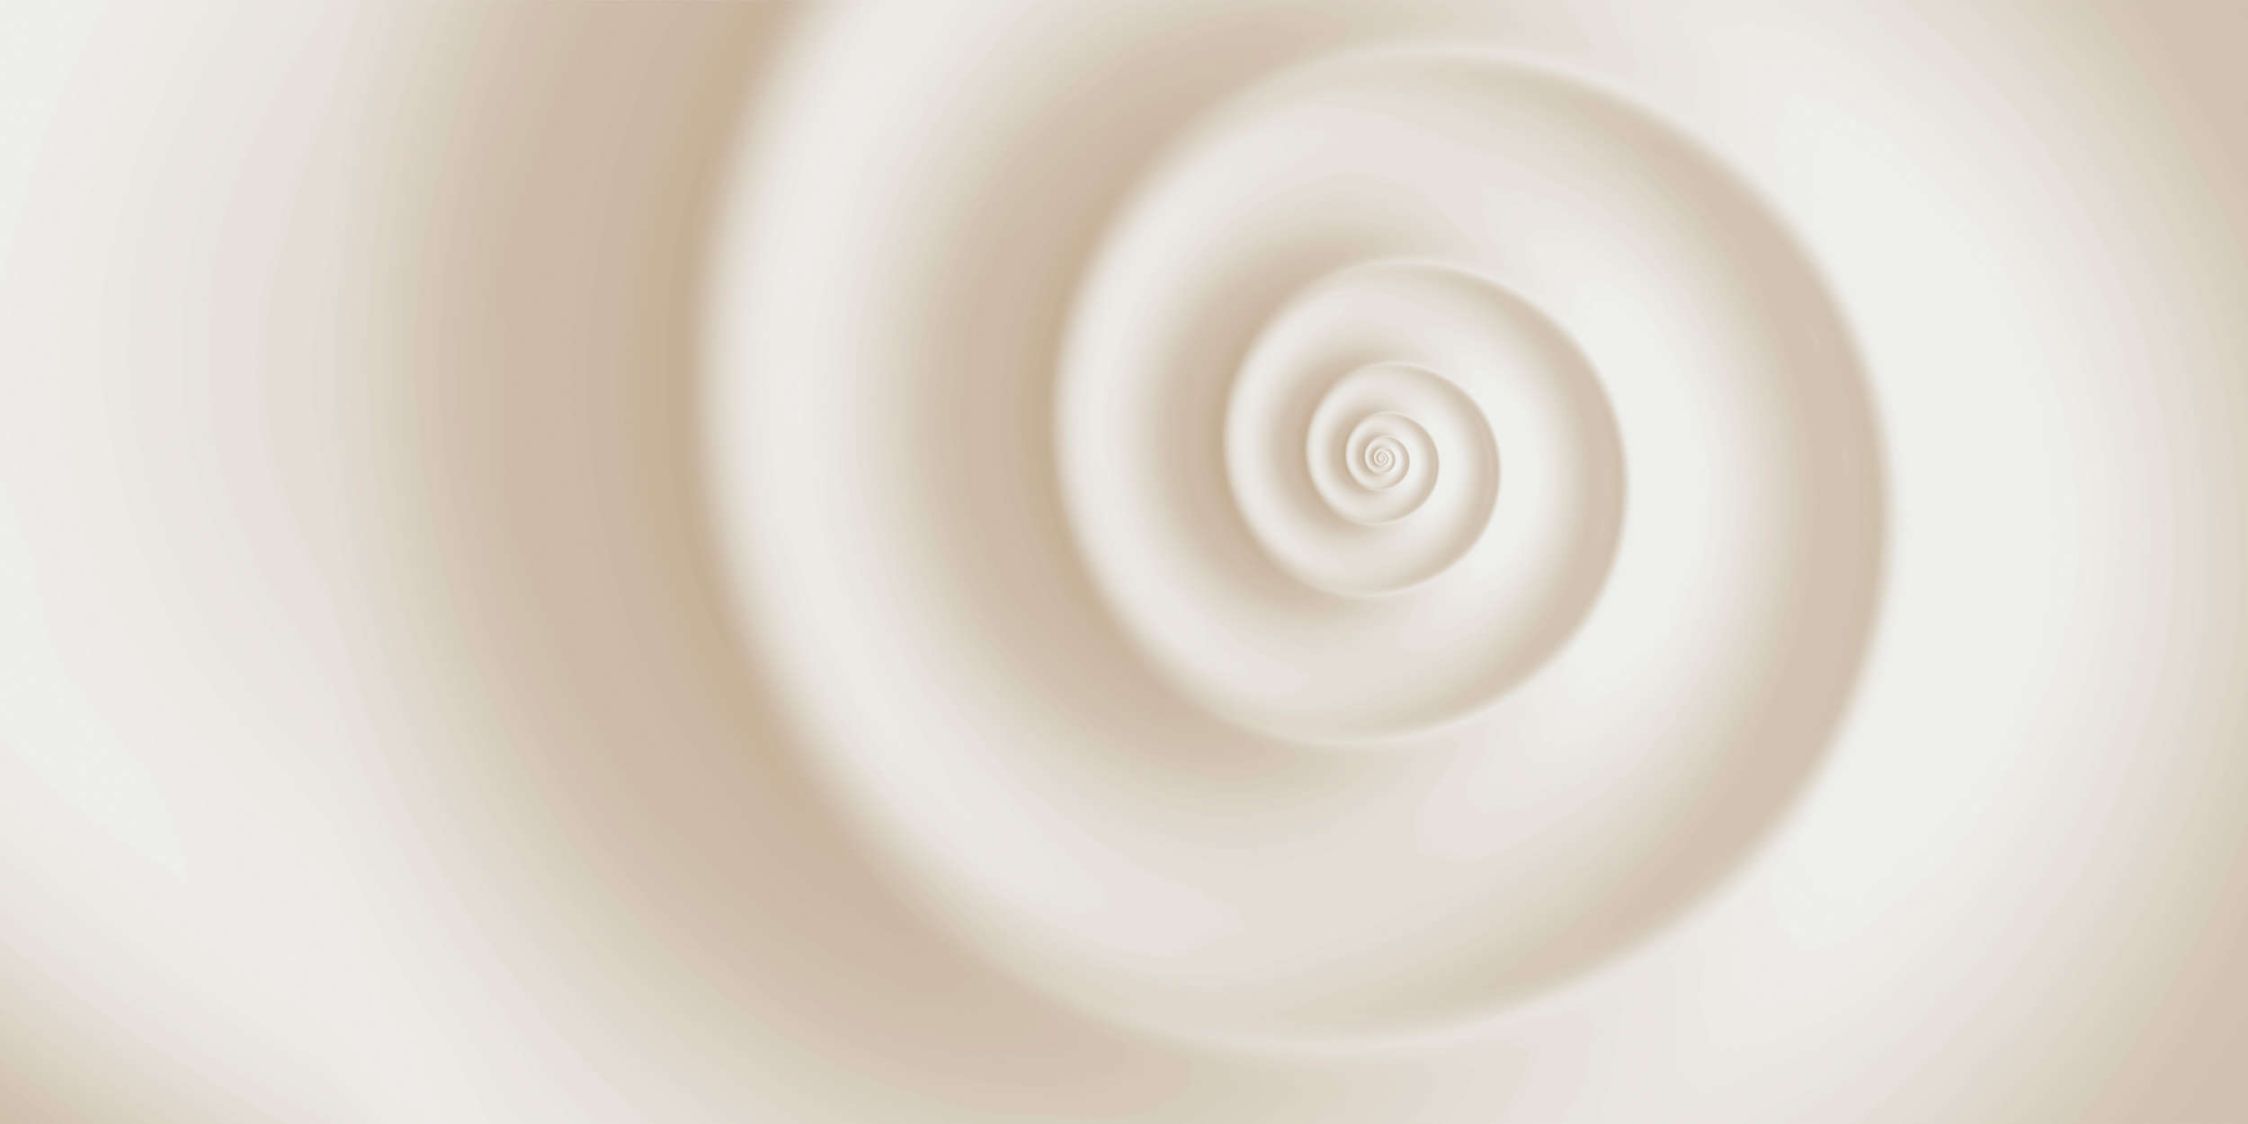             Fotomurali »swirl« - Leggero motivo a spirale - Materiali non tessuto liscio e leggermente perlato
        